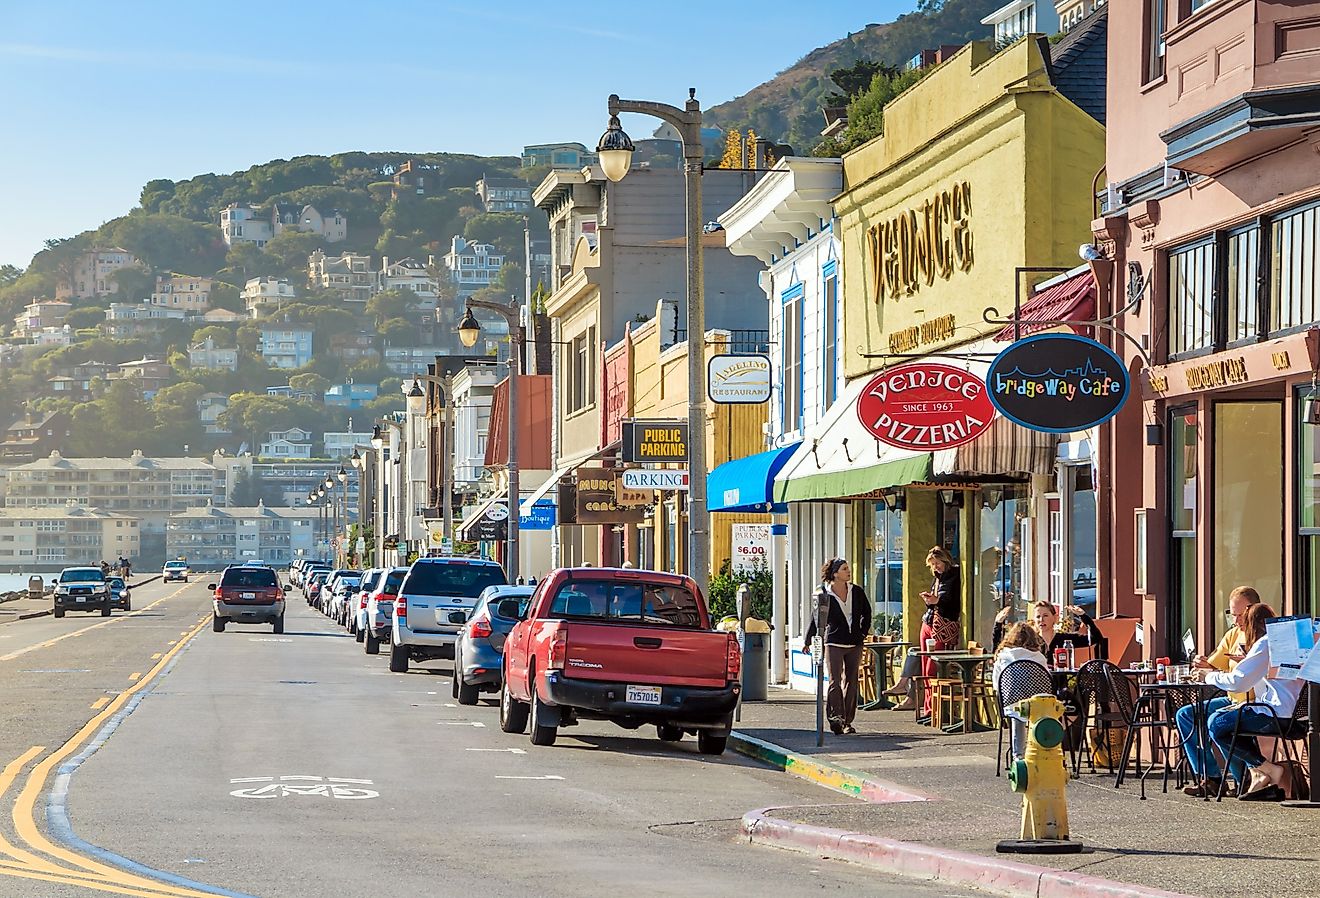 Street view in Sausalito, California. Image credit f11photo via Shutterstock